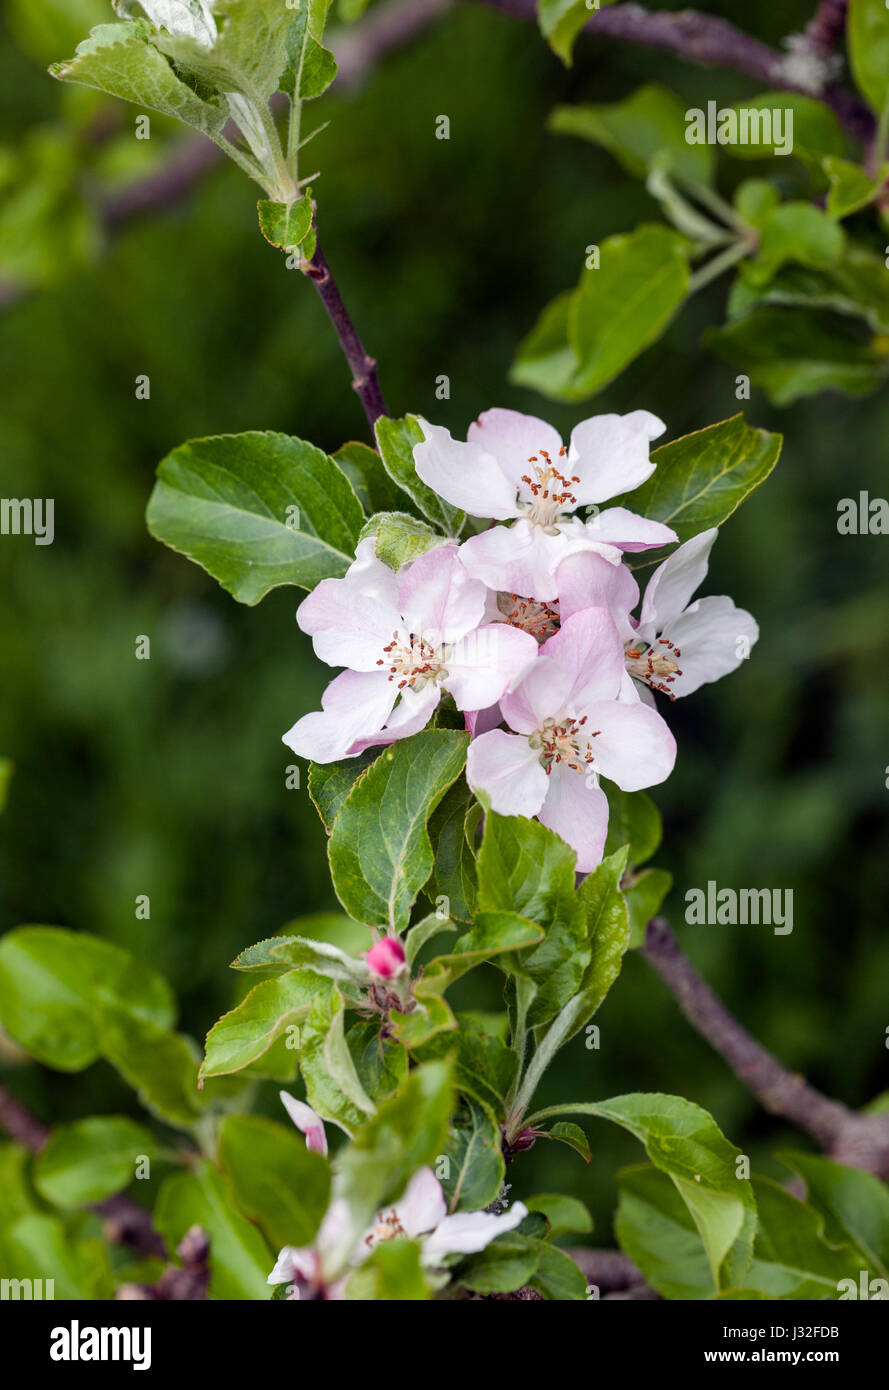 Malus domestica 'Woolbrook Pippin' Apfelblüte Nahaufnahme Blüte im Frühjahr, England, Großbritannien Stockfoto